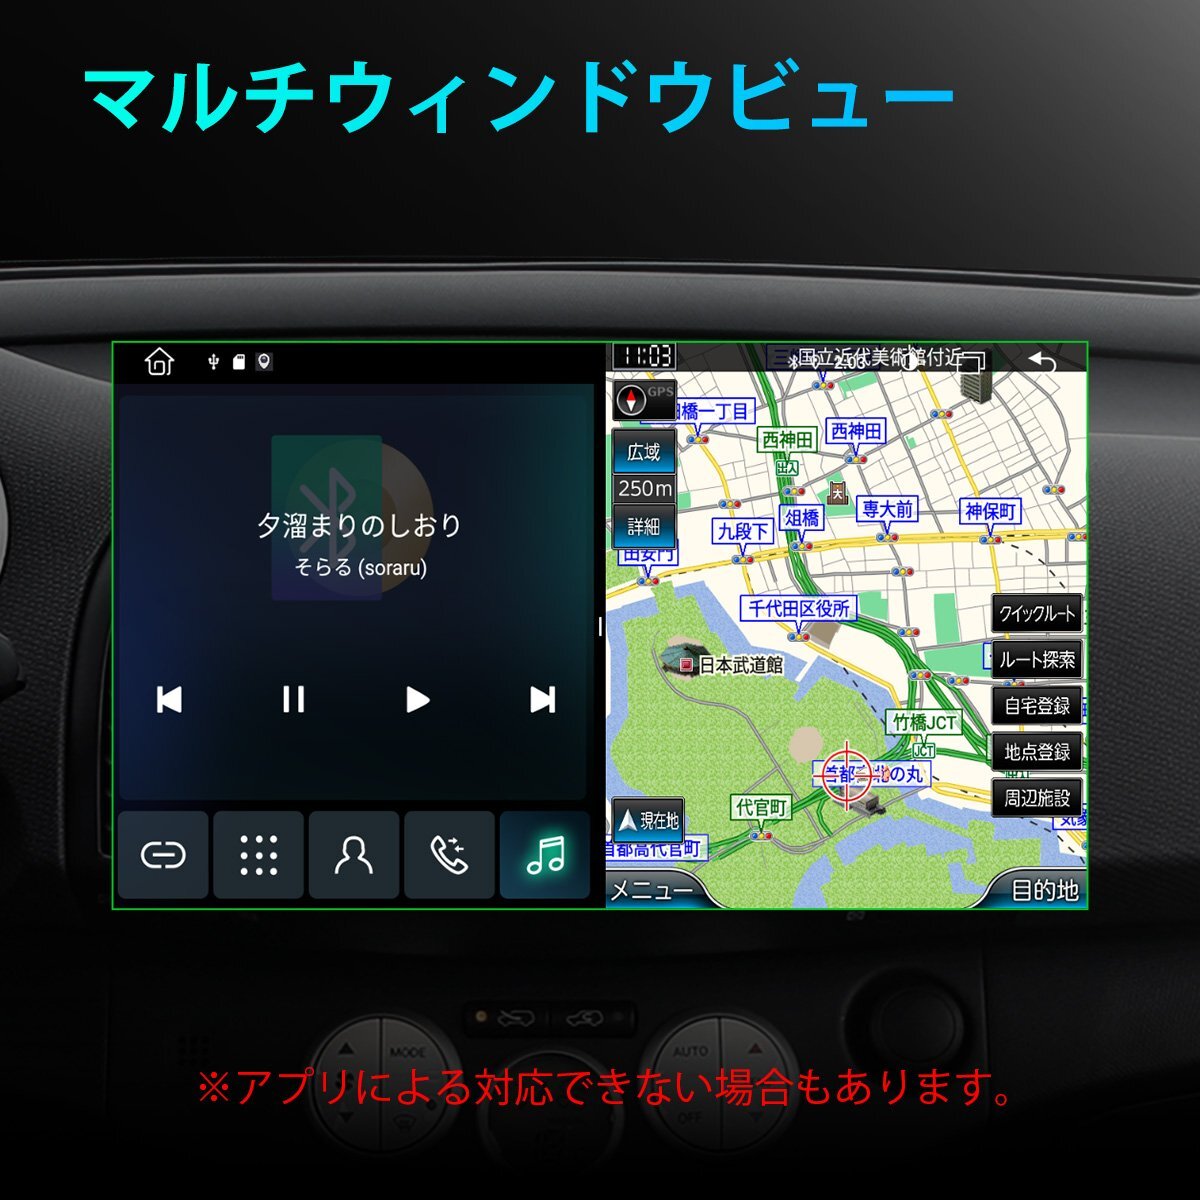 DIE123L★ задний  камера  бесплатно  включено ! XTRONS 1din  машина  navi  10.1 дюймов  Android12  автомобиль ...PC 4G... SIM поддержка Bluetooth iphone Carplay  зеркало   кольцо  